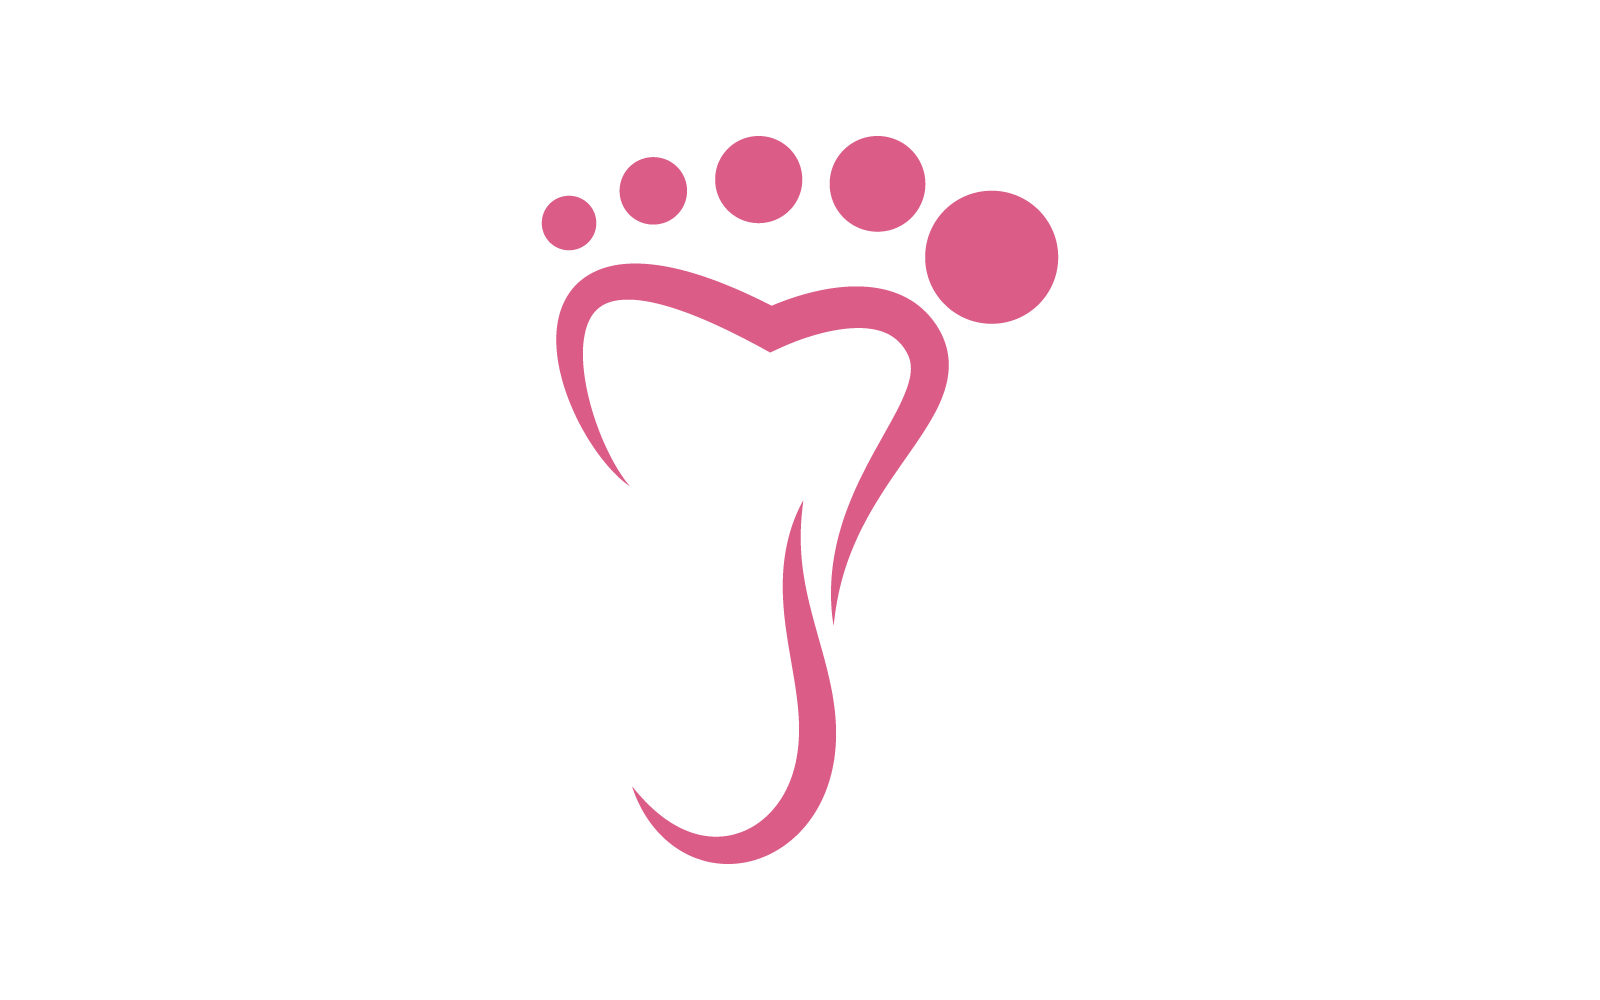 Foot step illustration logo icon vector design